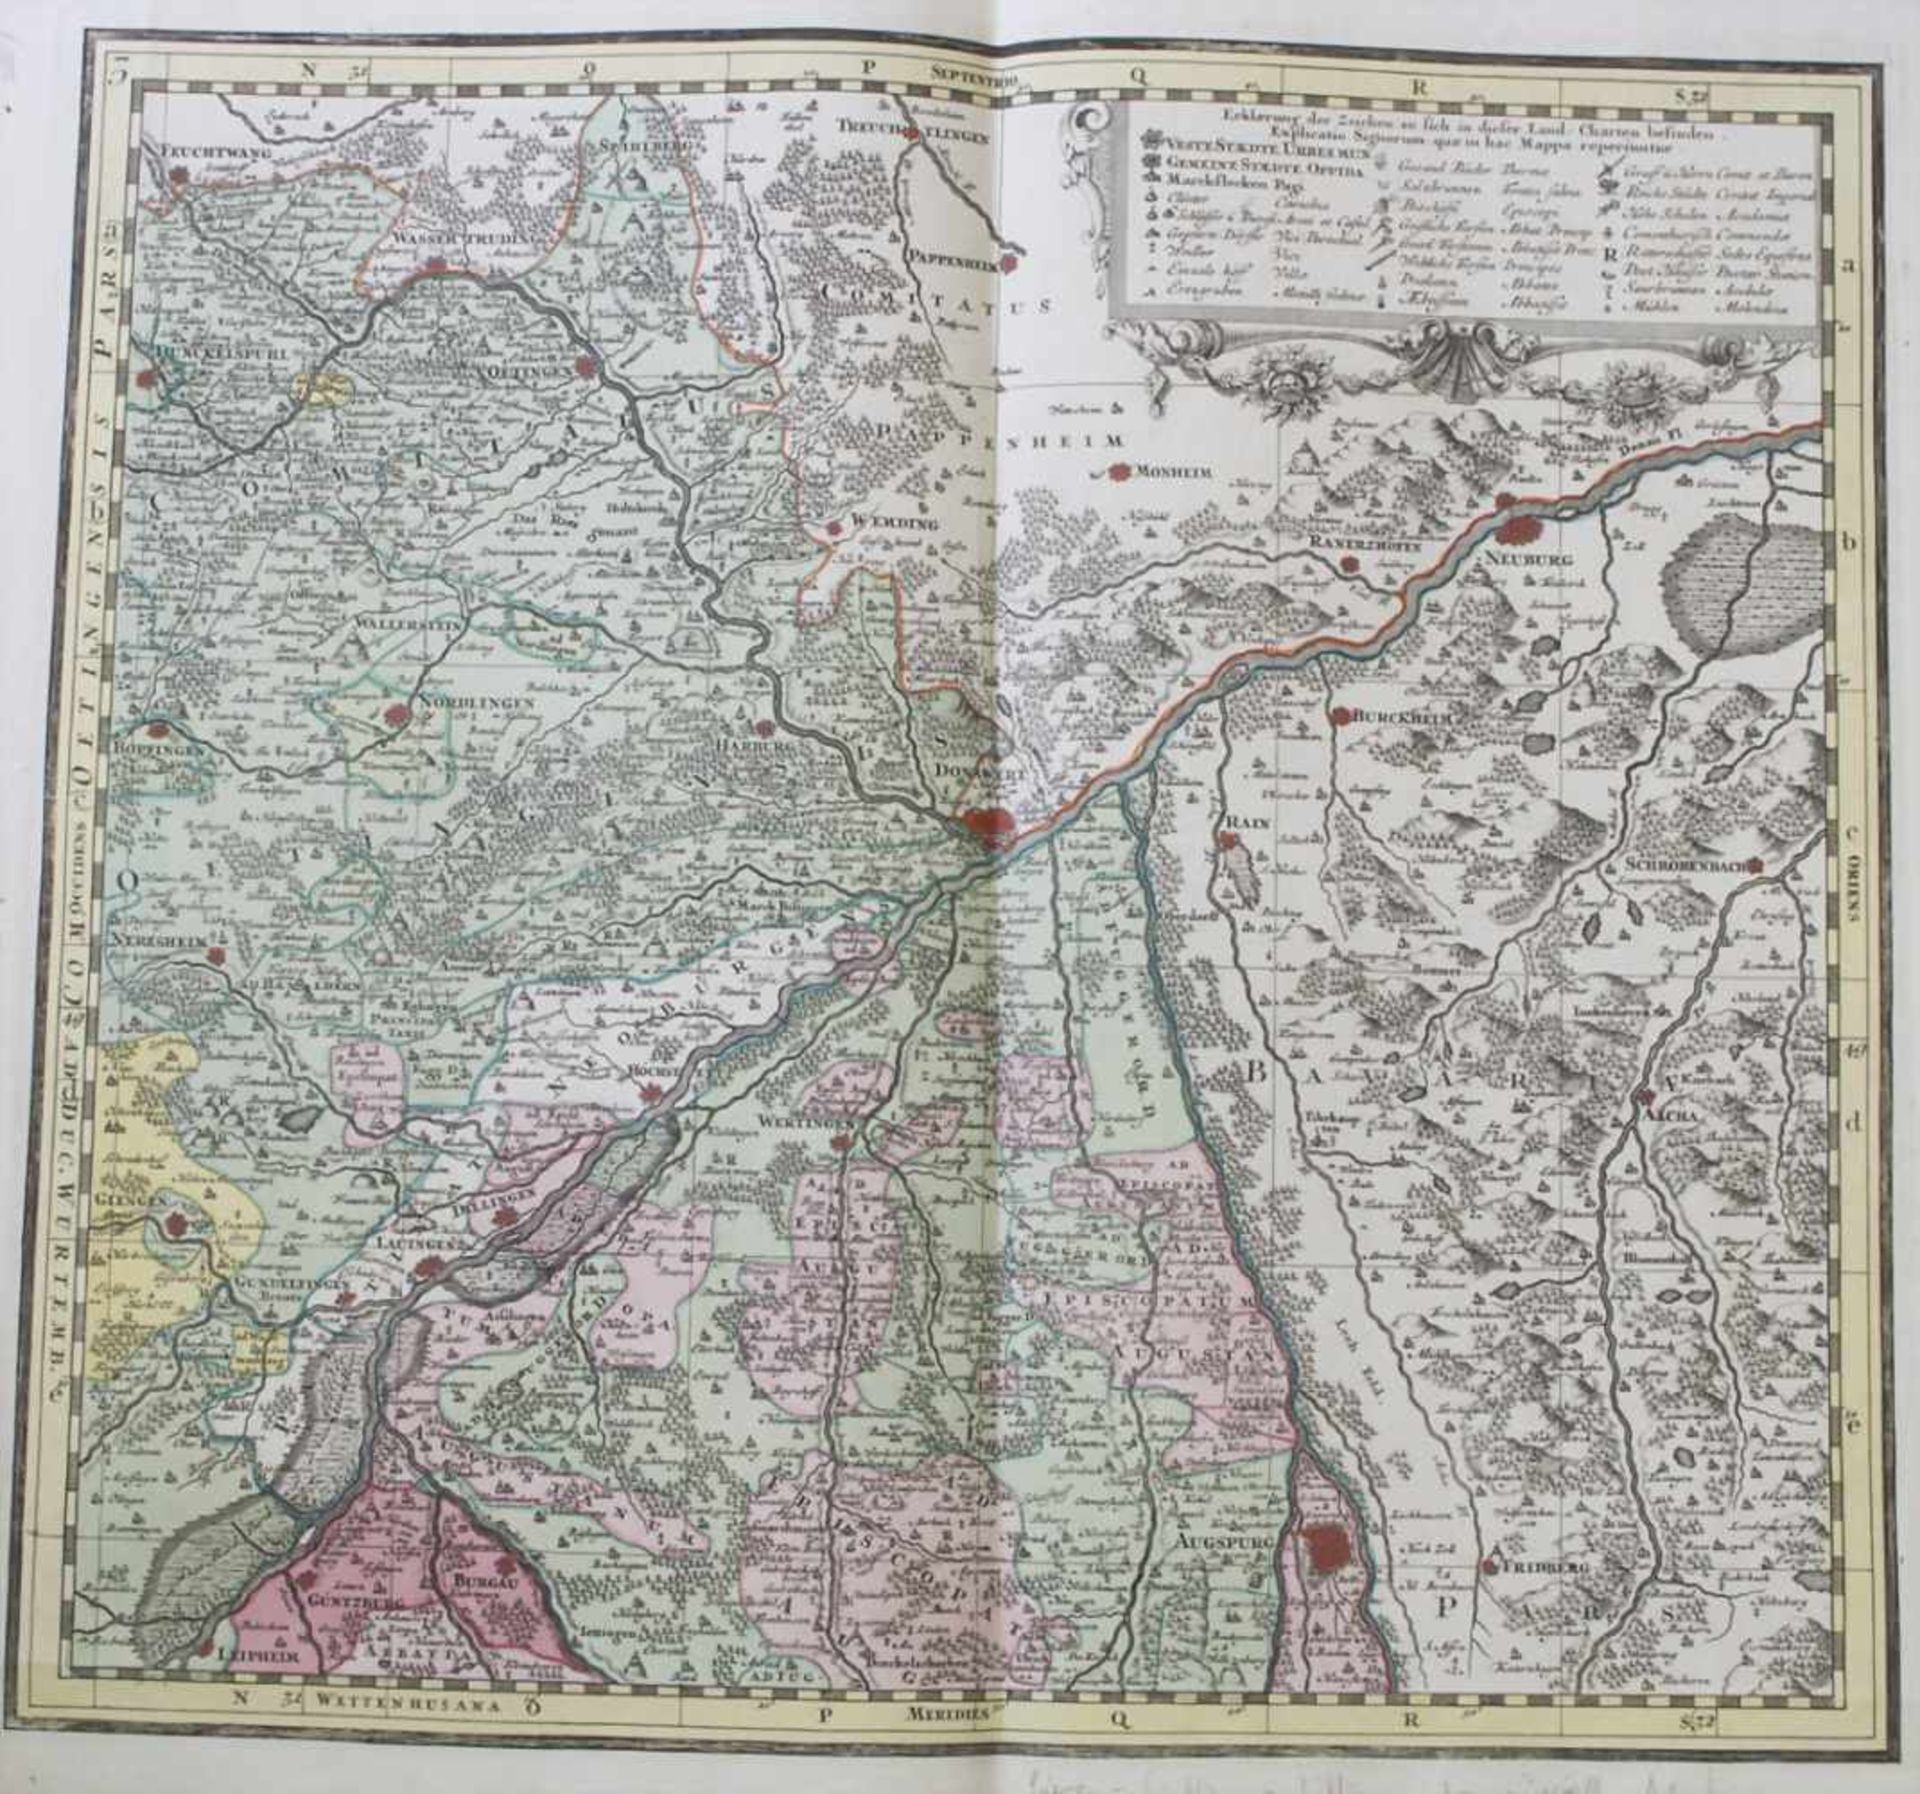 Matthias Seutter (1678-1757), Historische Karte 'Suevia Universa' / A historic map 'Suevia